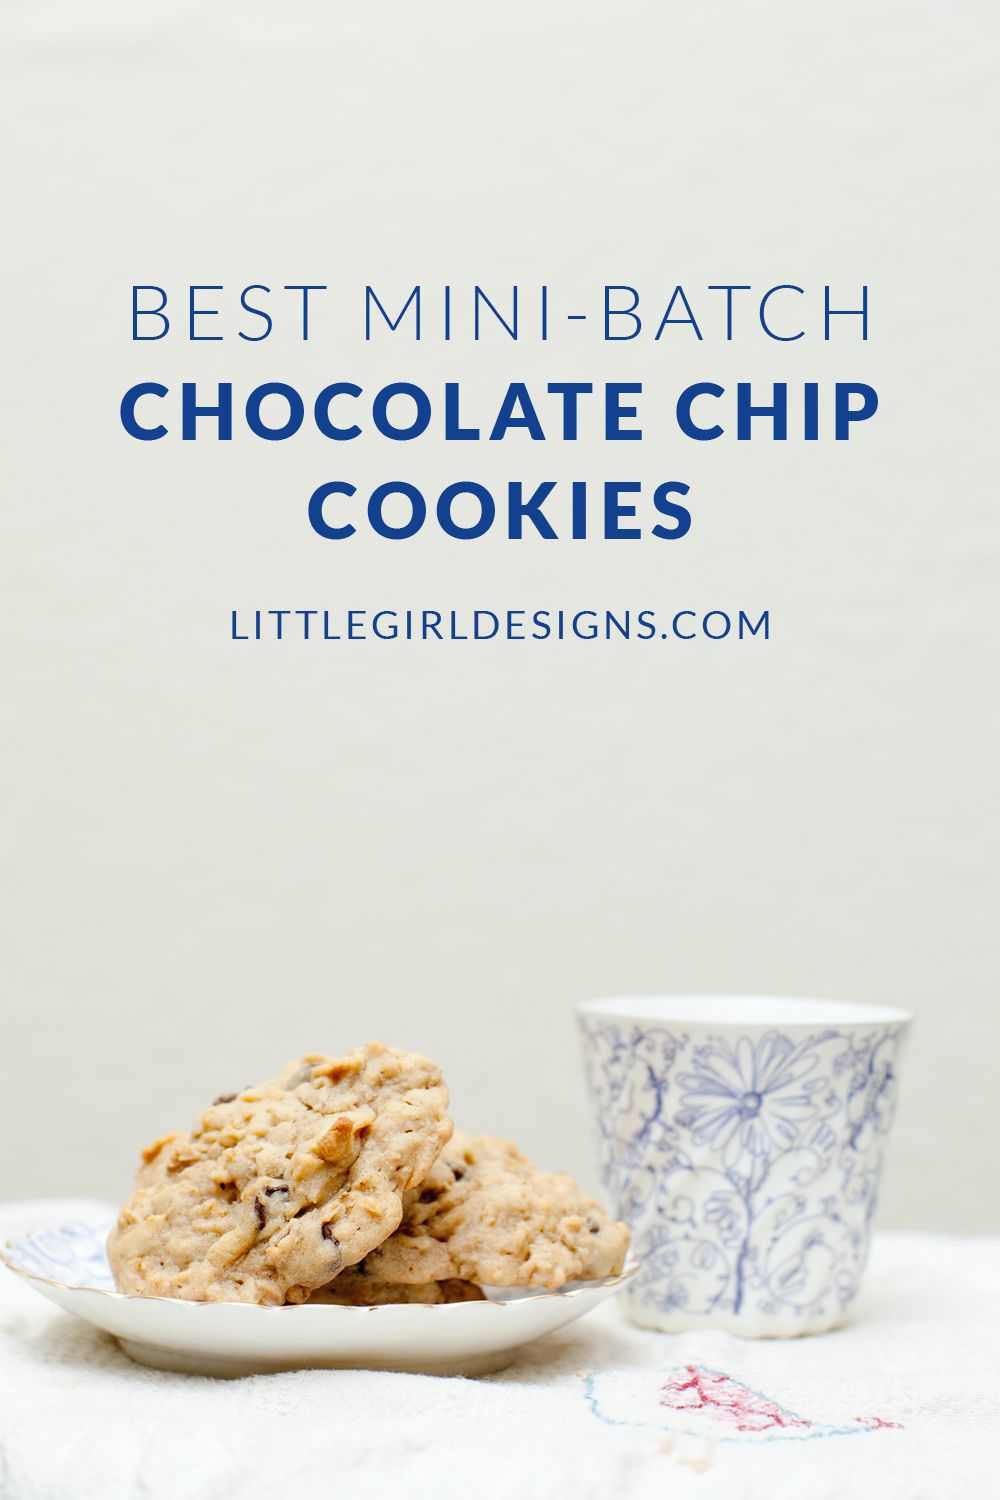 Best Mini-Batch Chocolate Chip Cookies